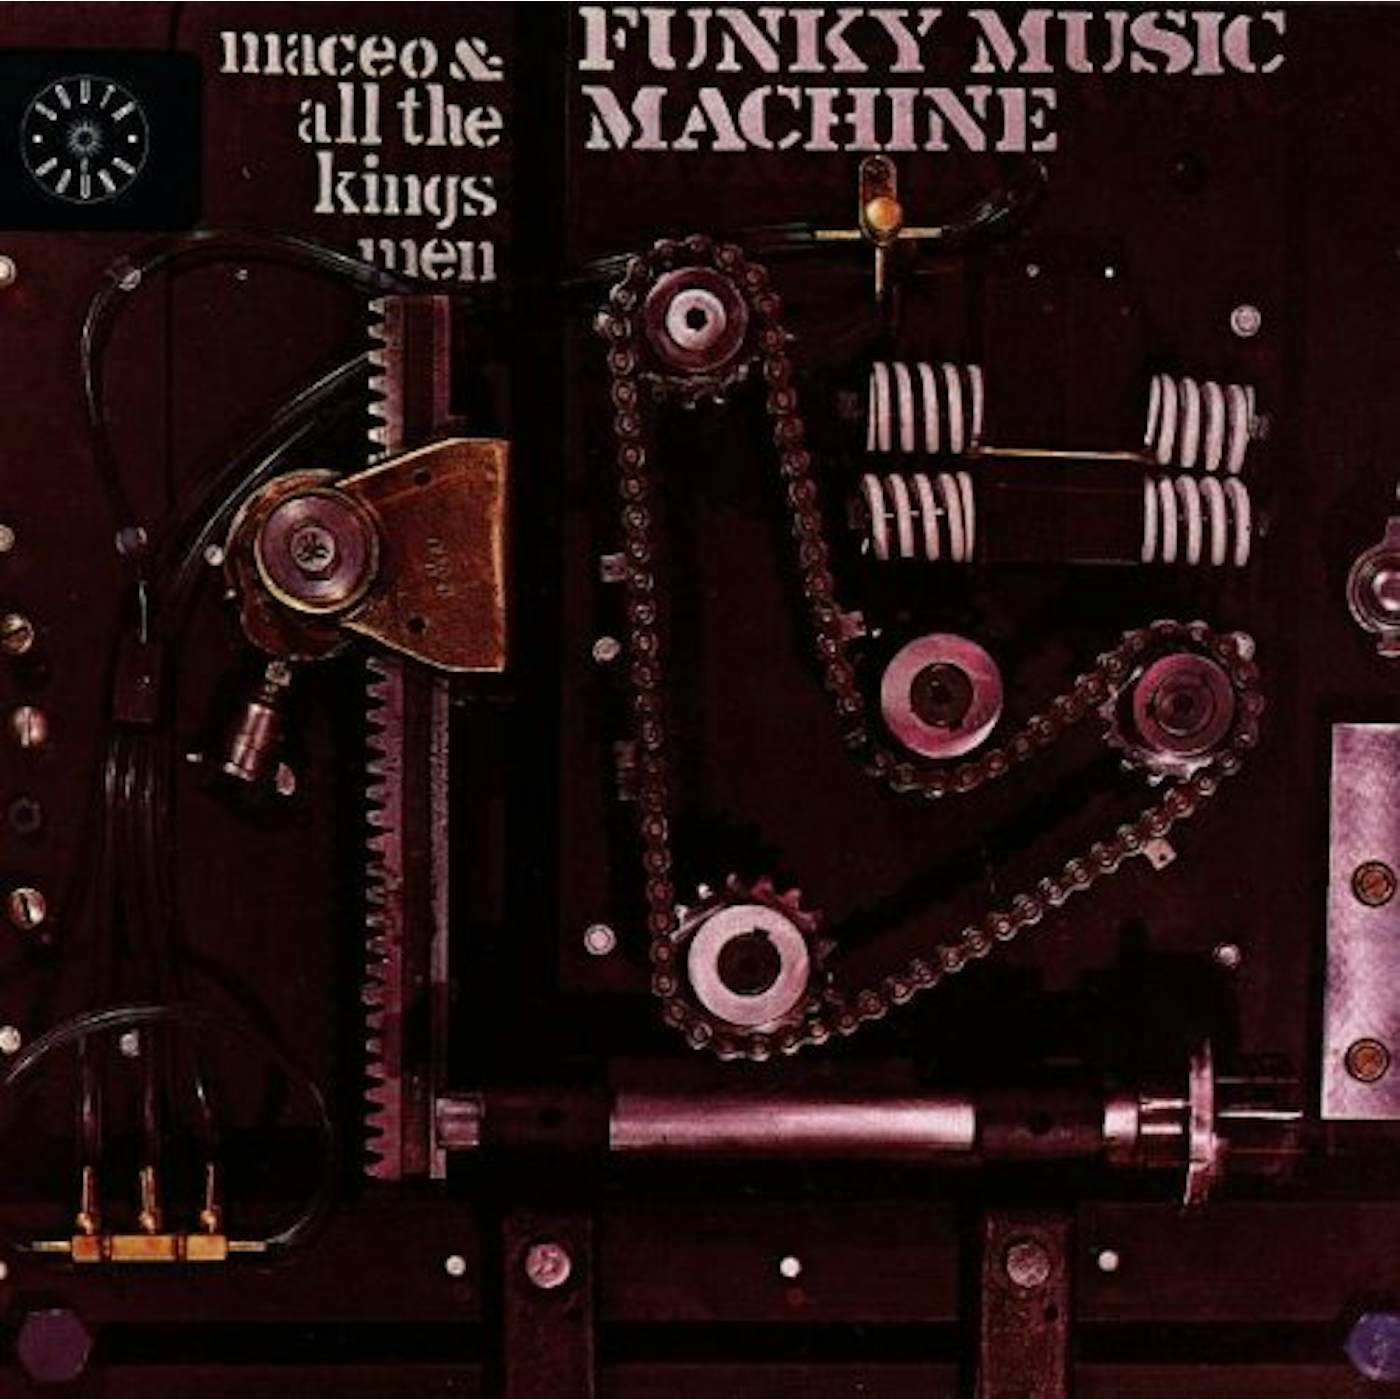 Maceo & All The Kings Men FUNKY MUSIC MACHINE CD